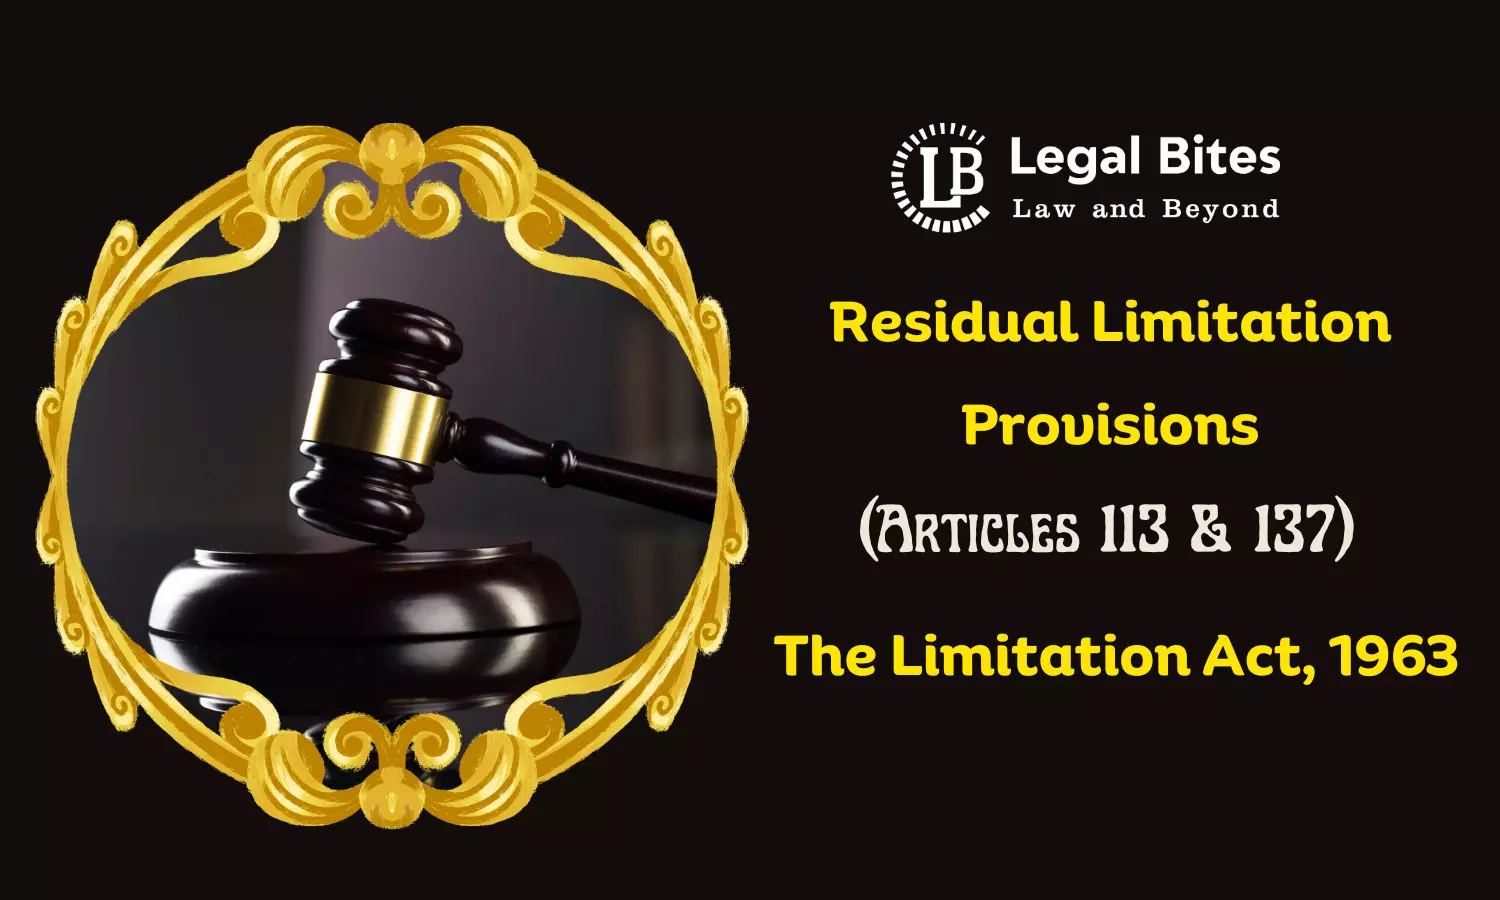 Residual Limitation Provisions (Articles 113 & 137) | The Limitation Act, 1963